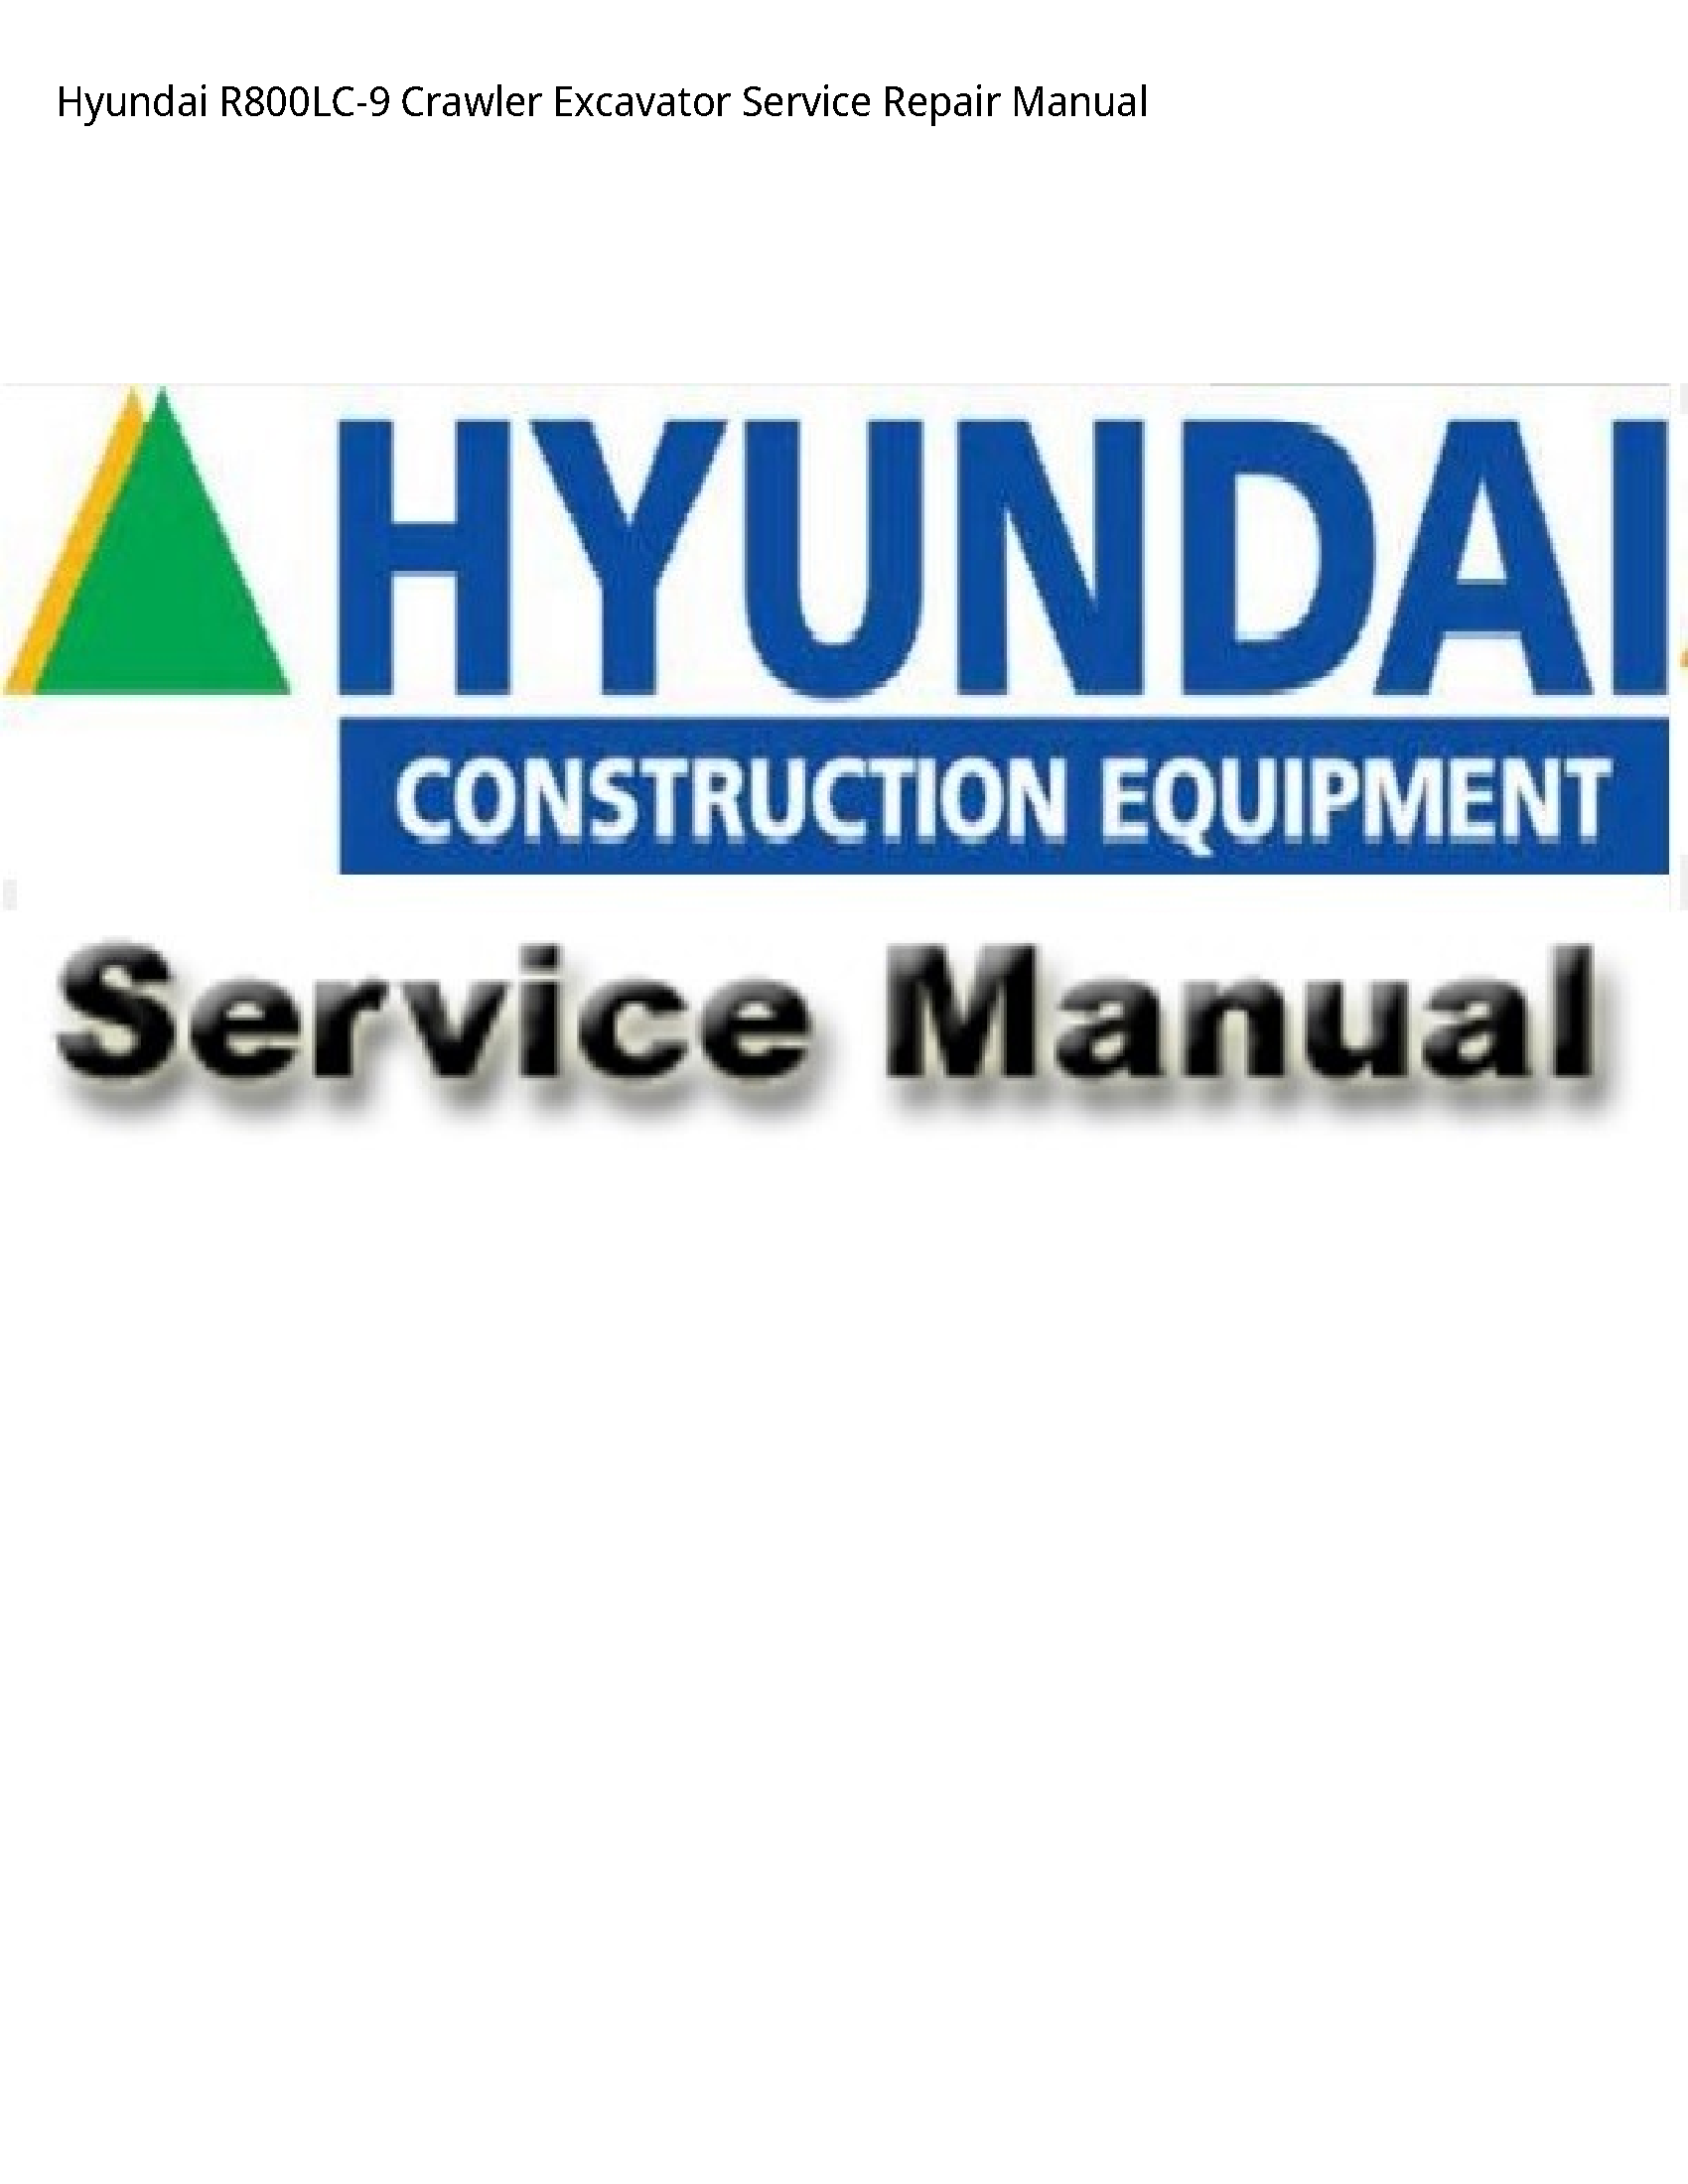 Hyundai R800LC-9 Crawler Excavator manual